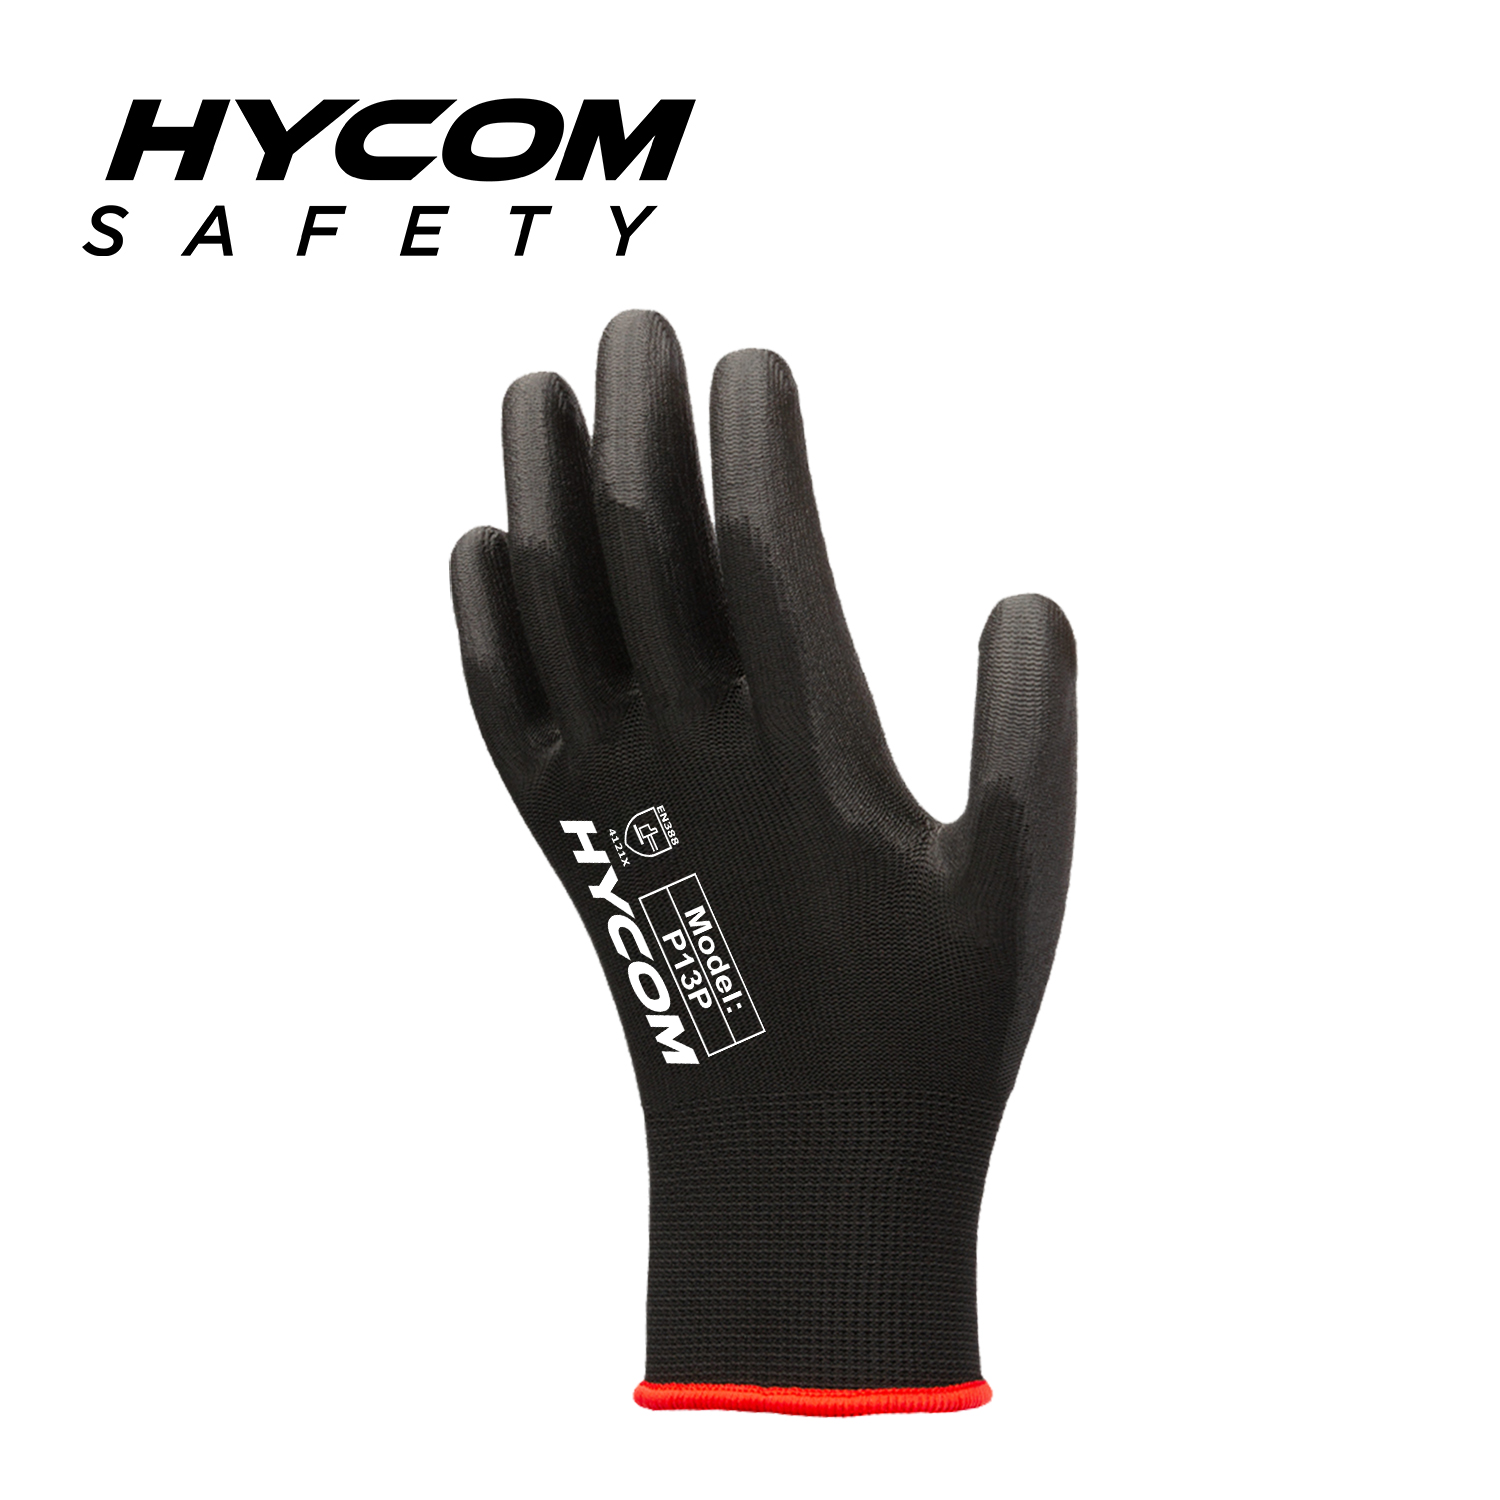 HYCOM 13G Polyester work glove with palm polyurethane coating